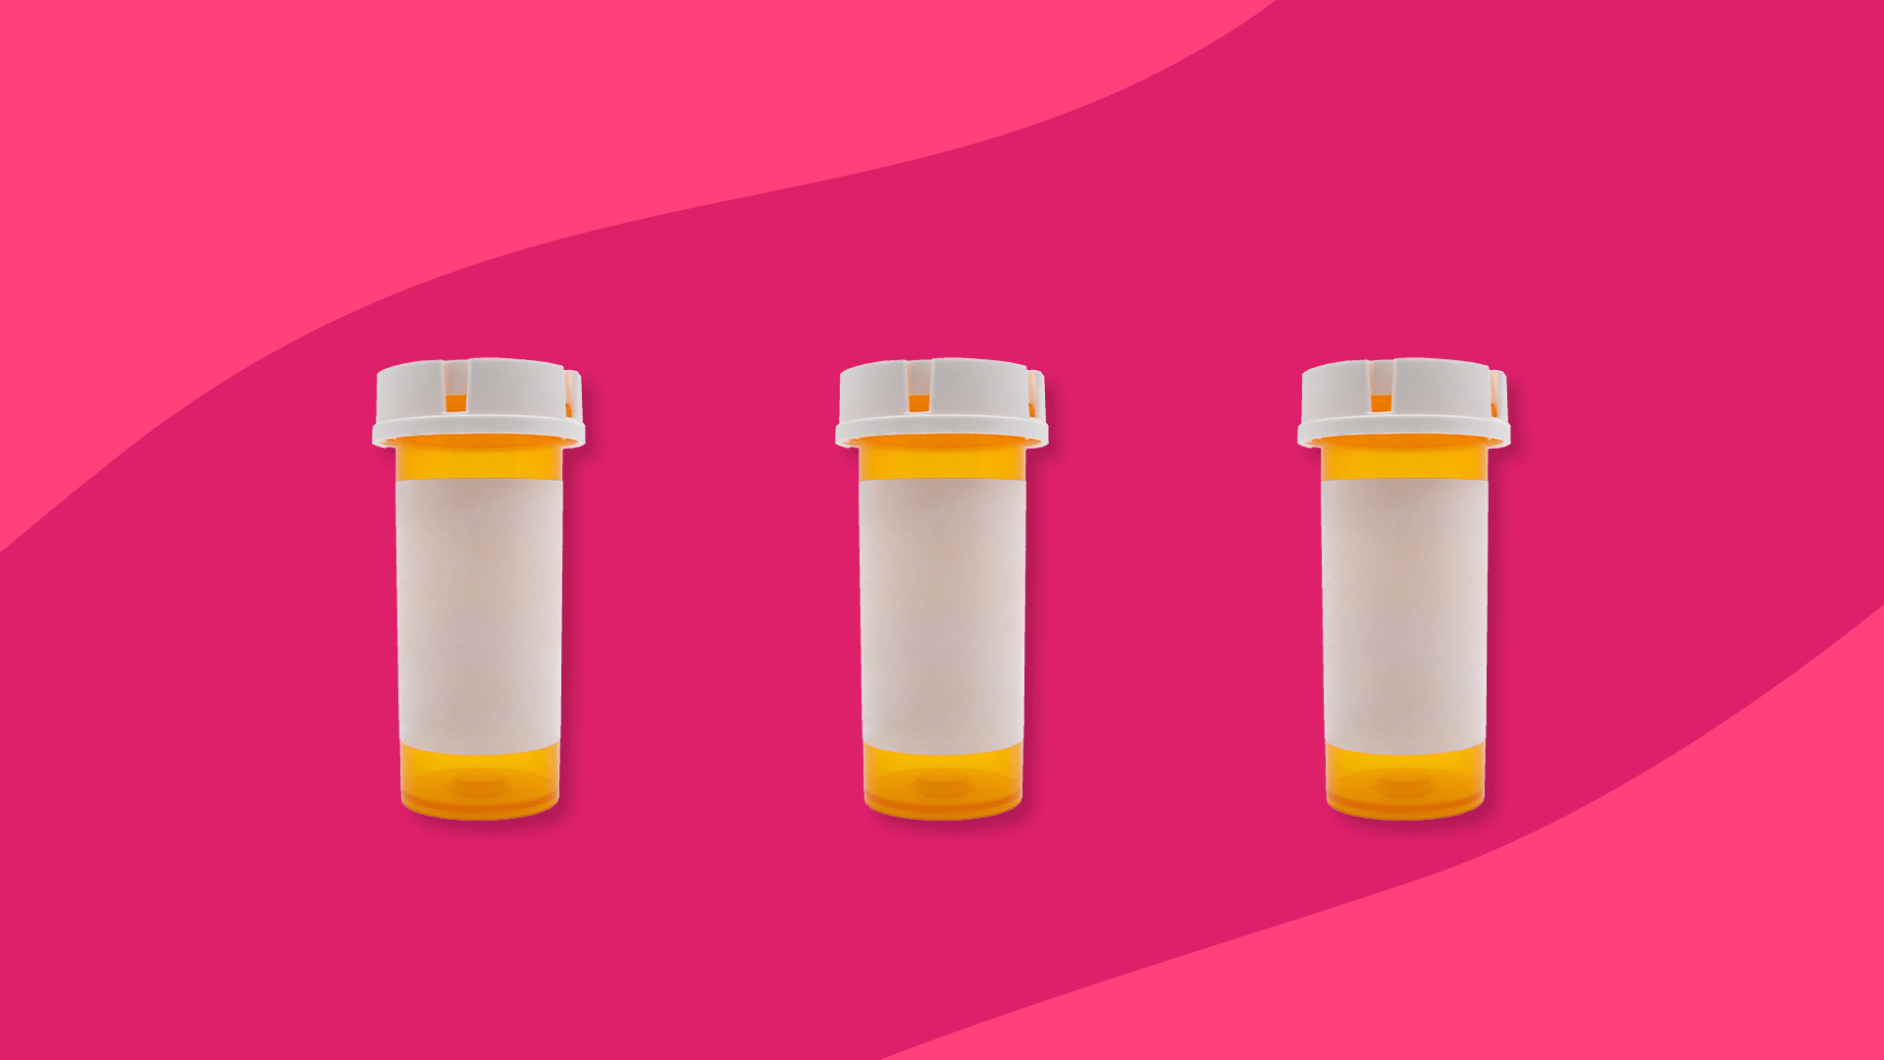 Rx pill bottles: Propranolol Hcl (Inderal) alternatives